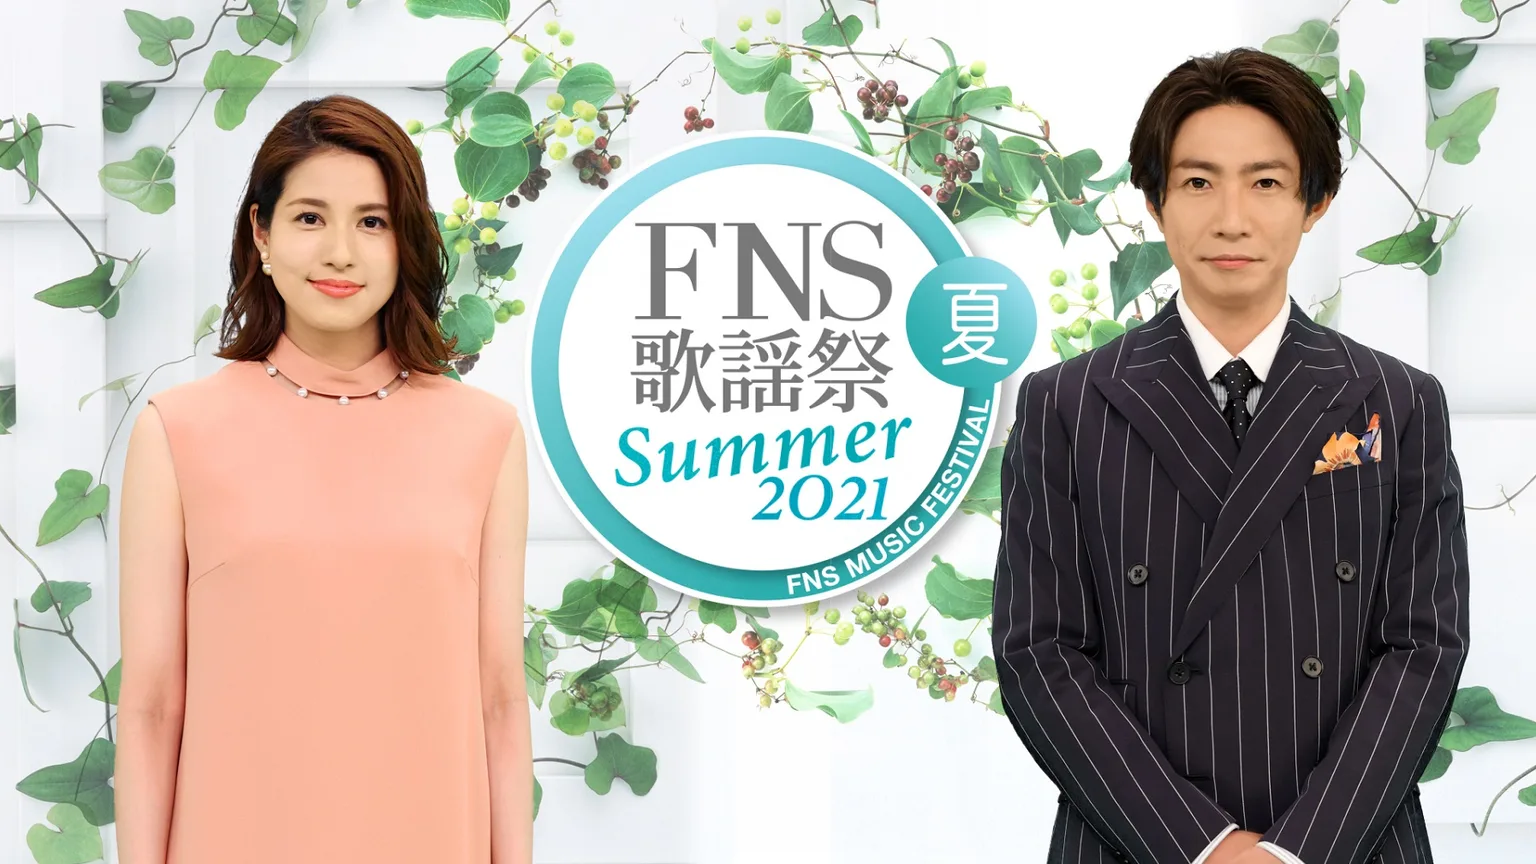 『2021FNS歌謡祭 夏』の（左から）永島優美フジテレビアナウンサー、相葉雅紀